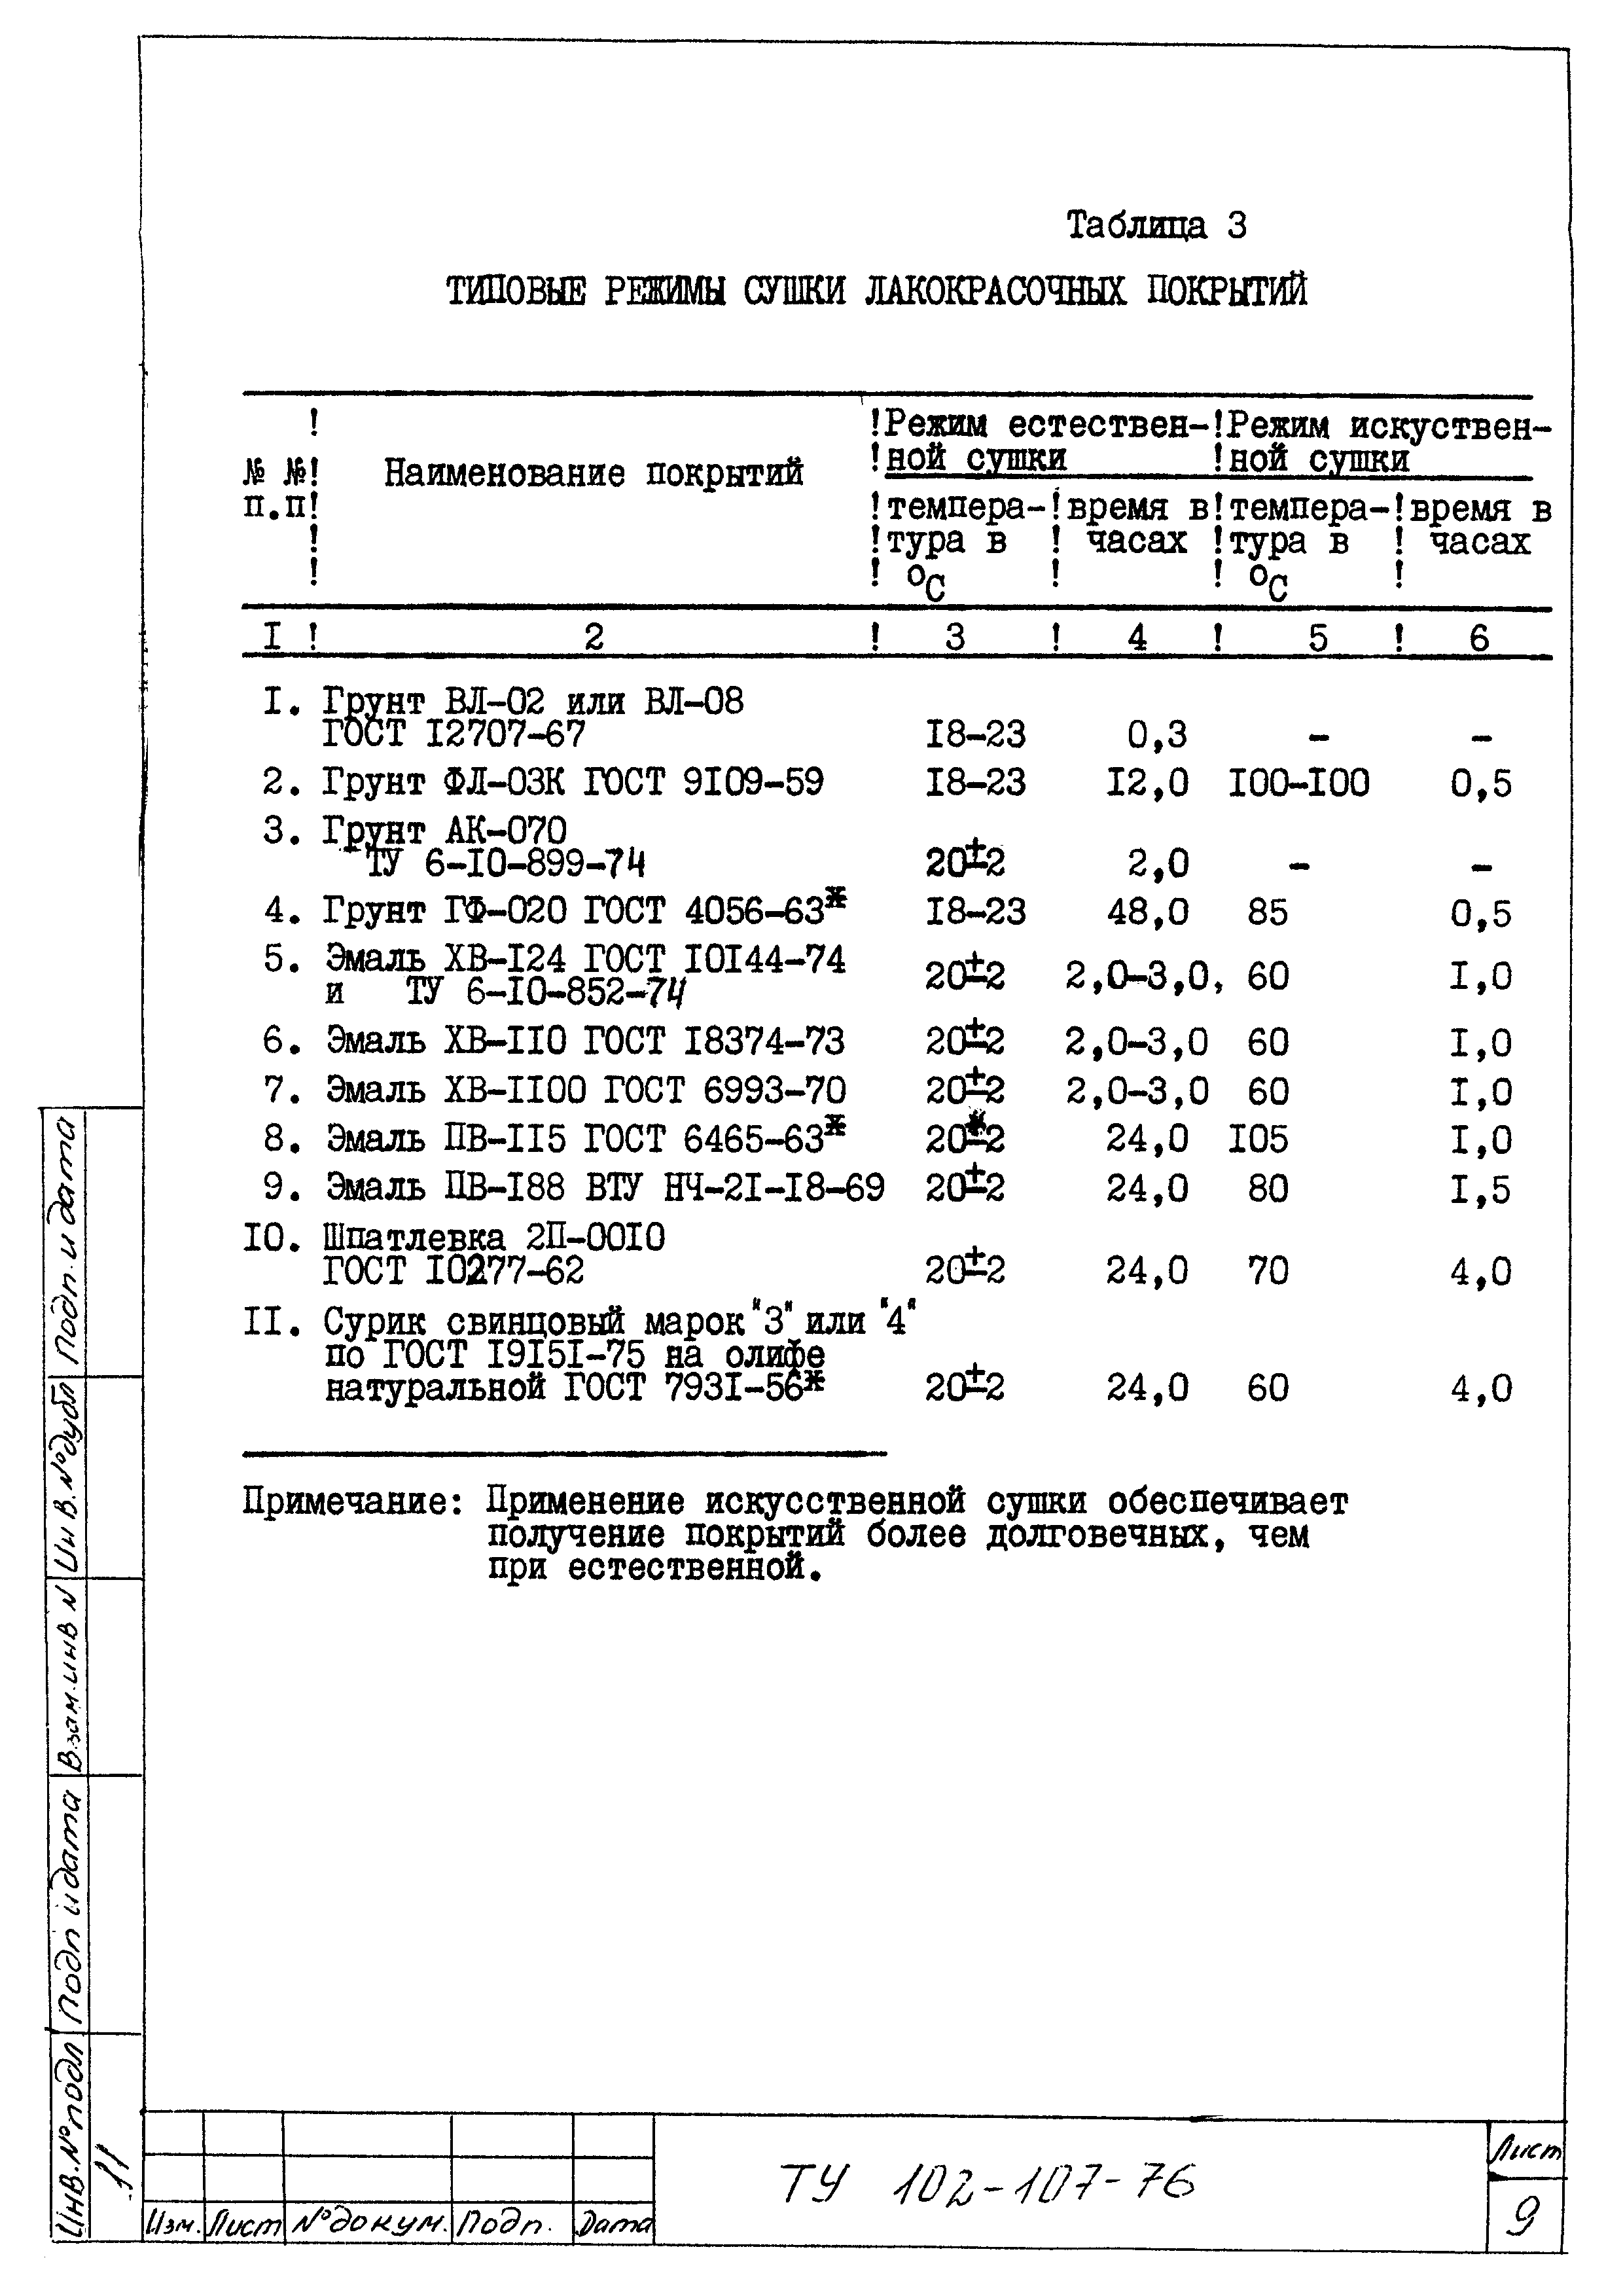 ТУ 102-107-76